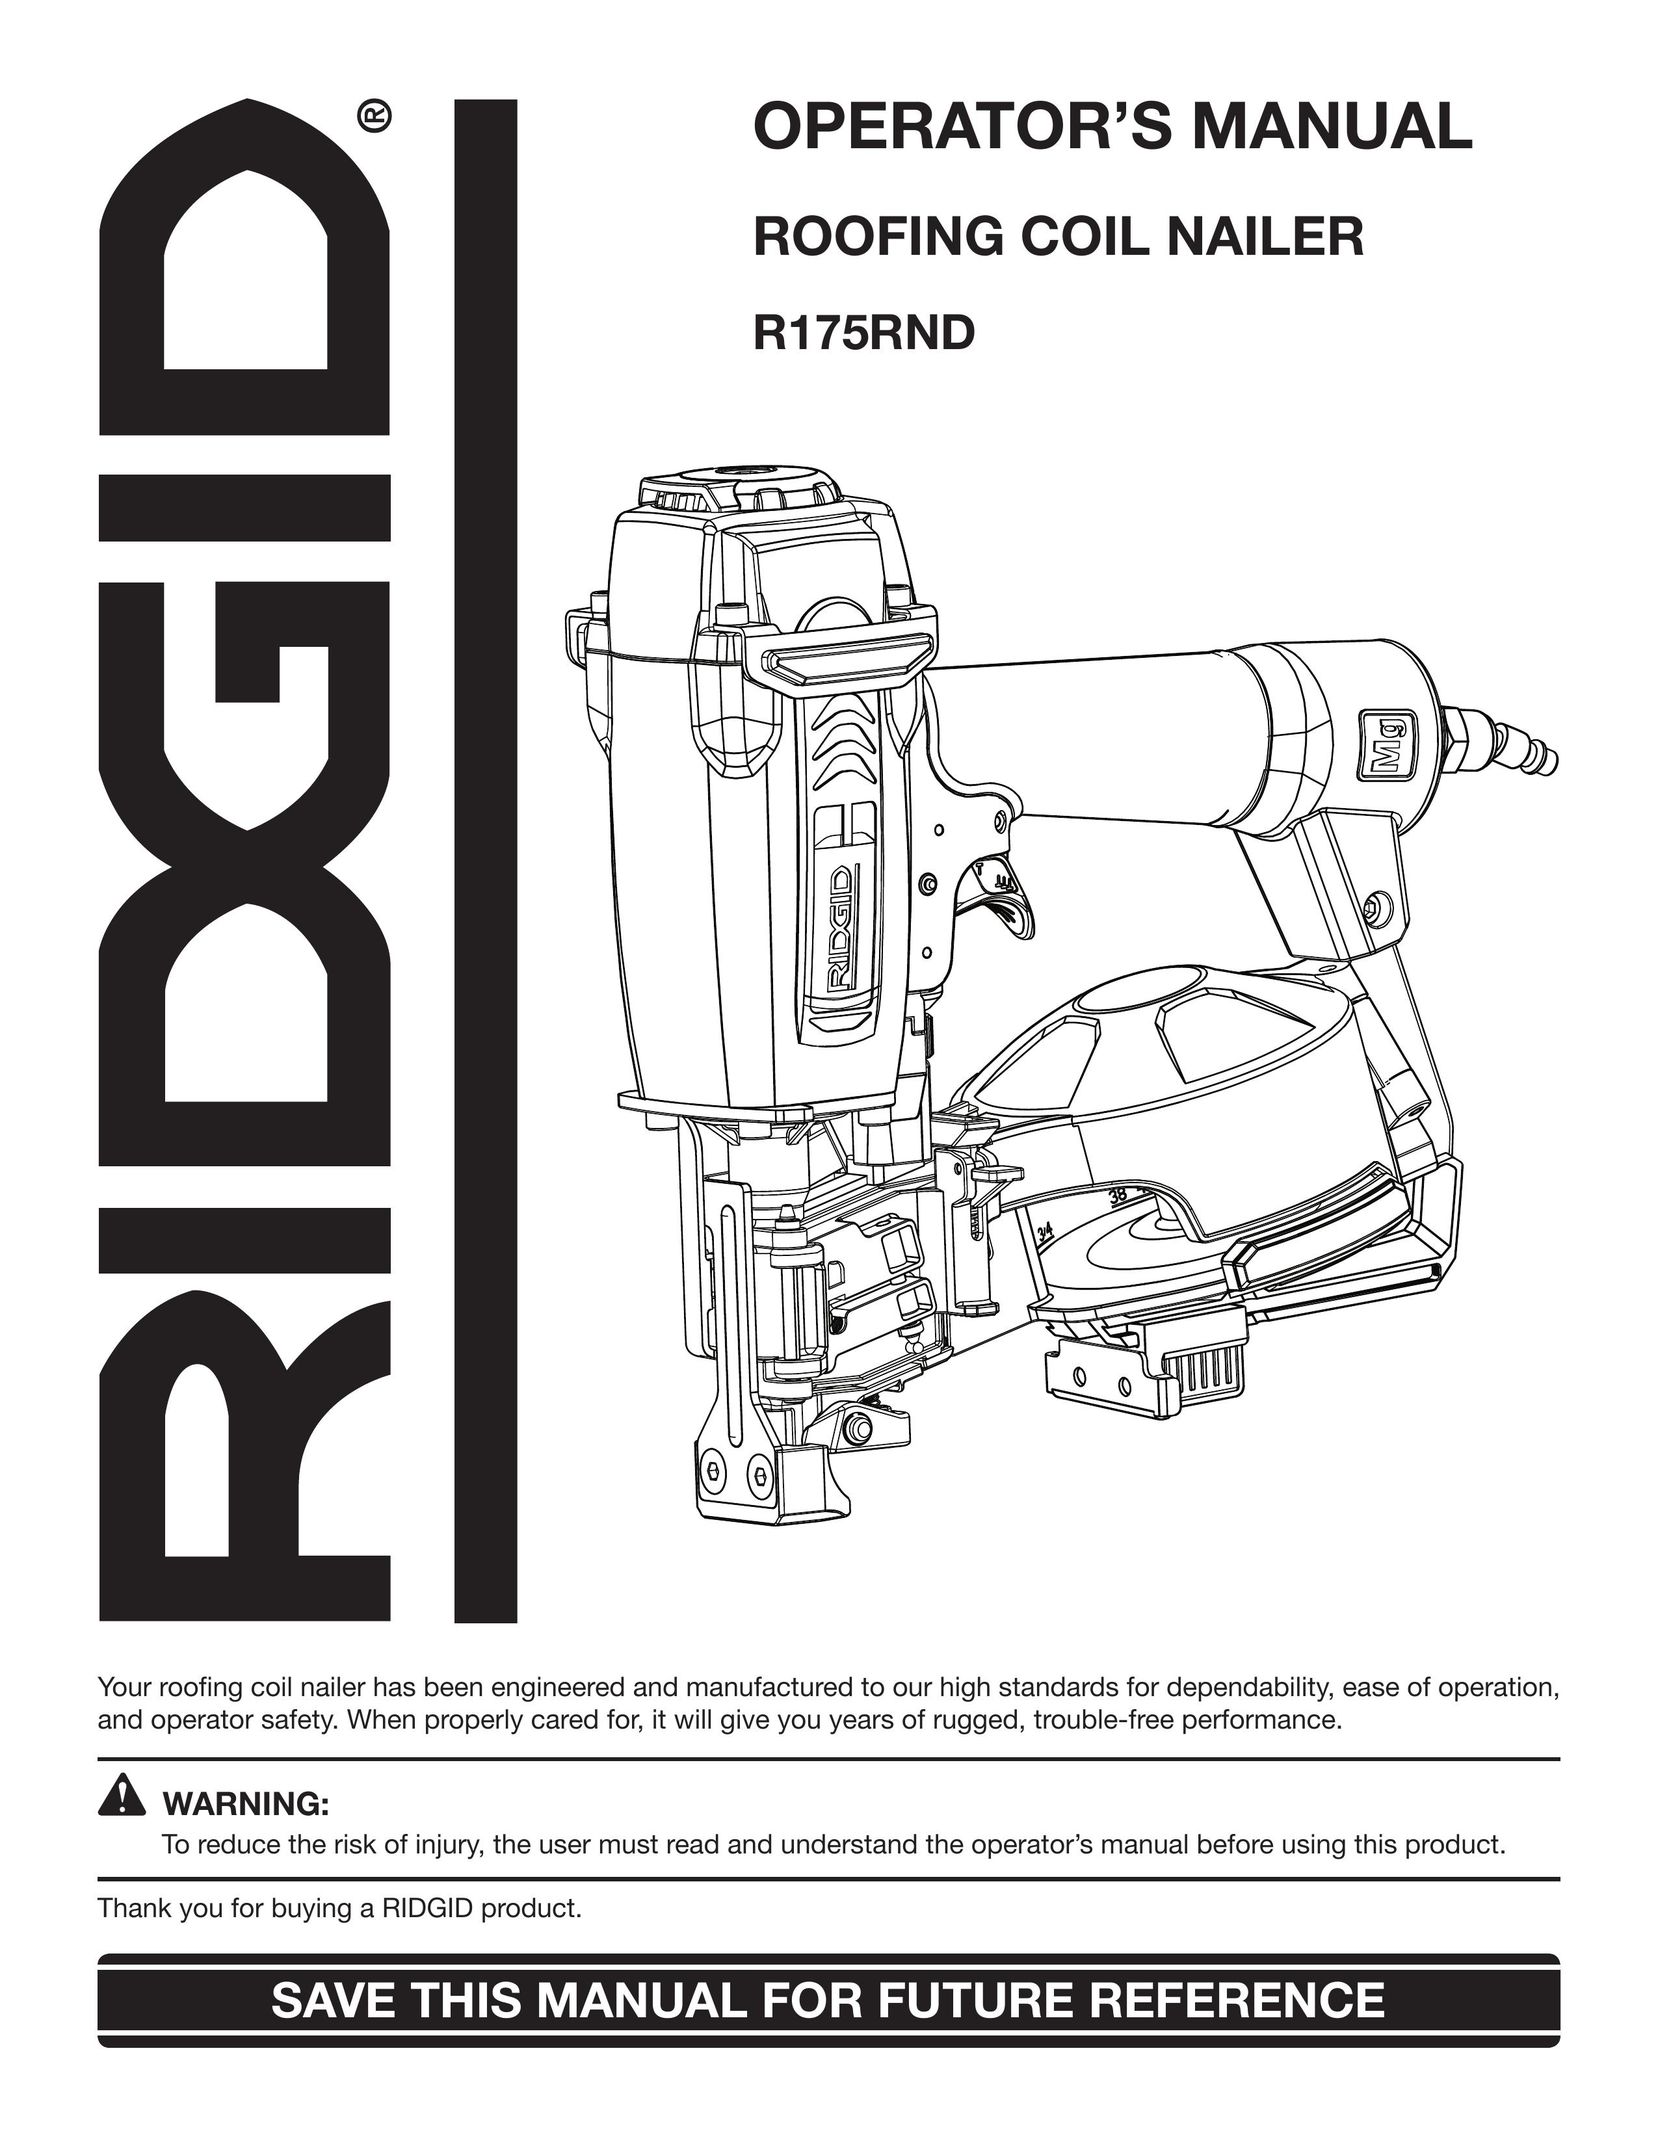 RIDGID R175RND Nail Gun User Manual